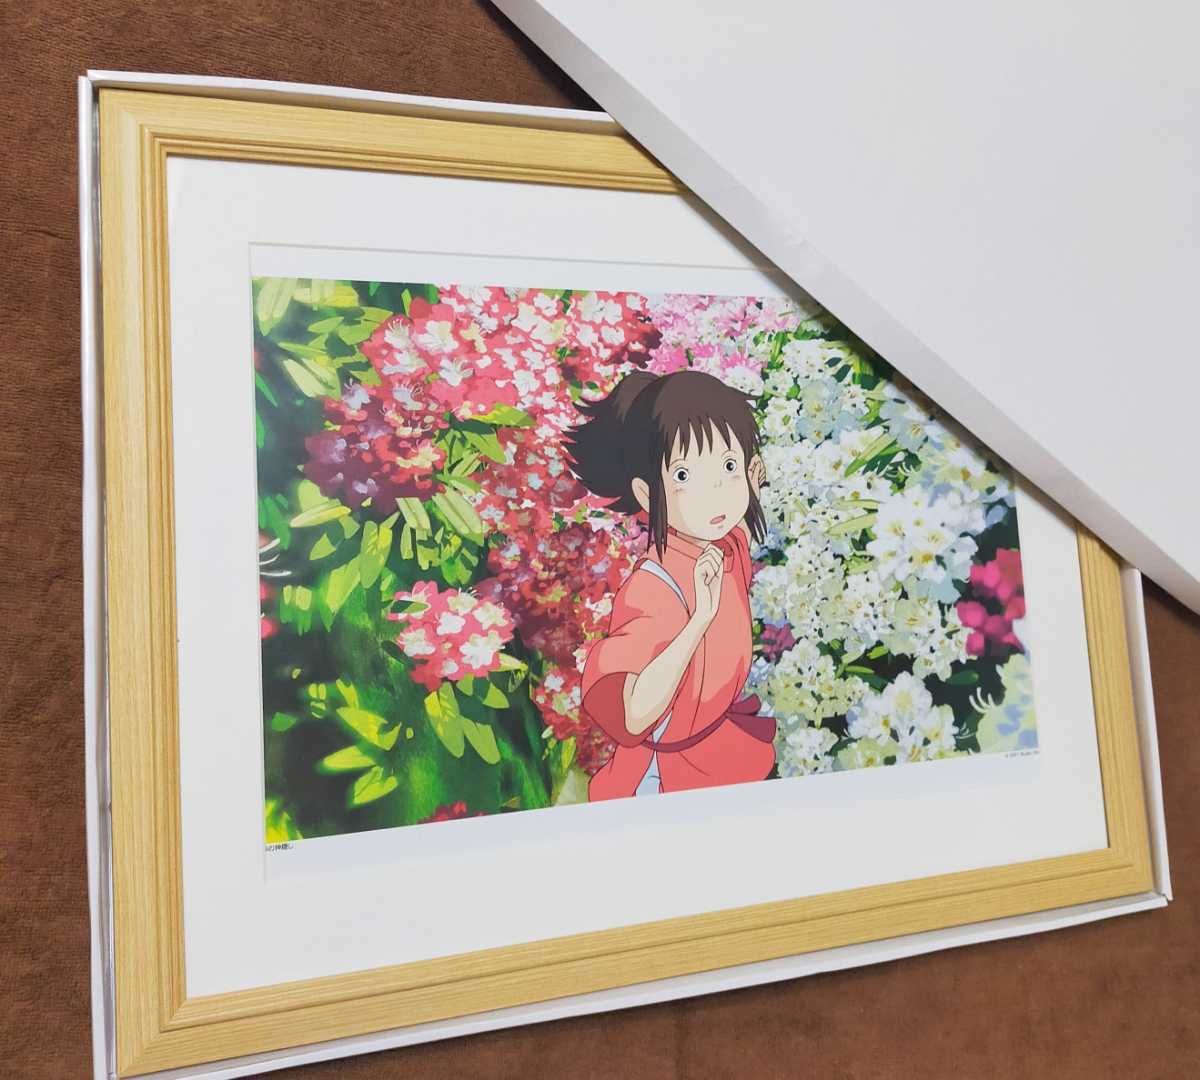 Studio Ghibli Spirited Away [Gerahmter Artikel] Ghibli Poster (Inspektion) Ghibli Gemälde Reproduktion Original Postkarte. Ghibli-Kalender. Hayao Miyazaki GHIBLI, Comics, Anime-Waren, Andere